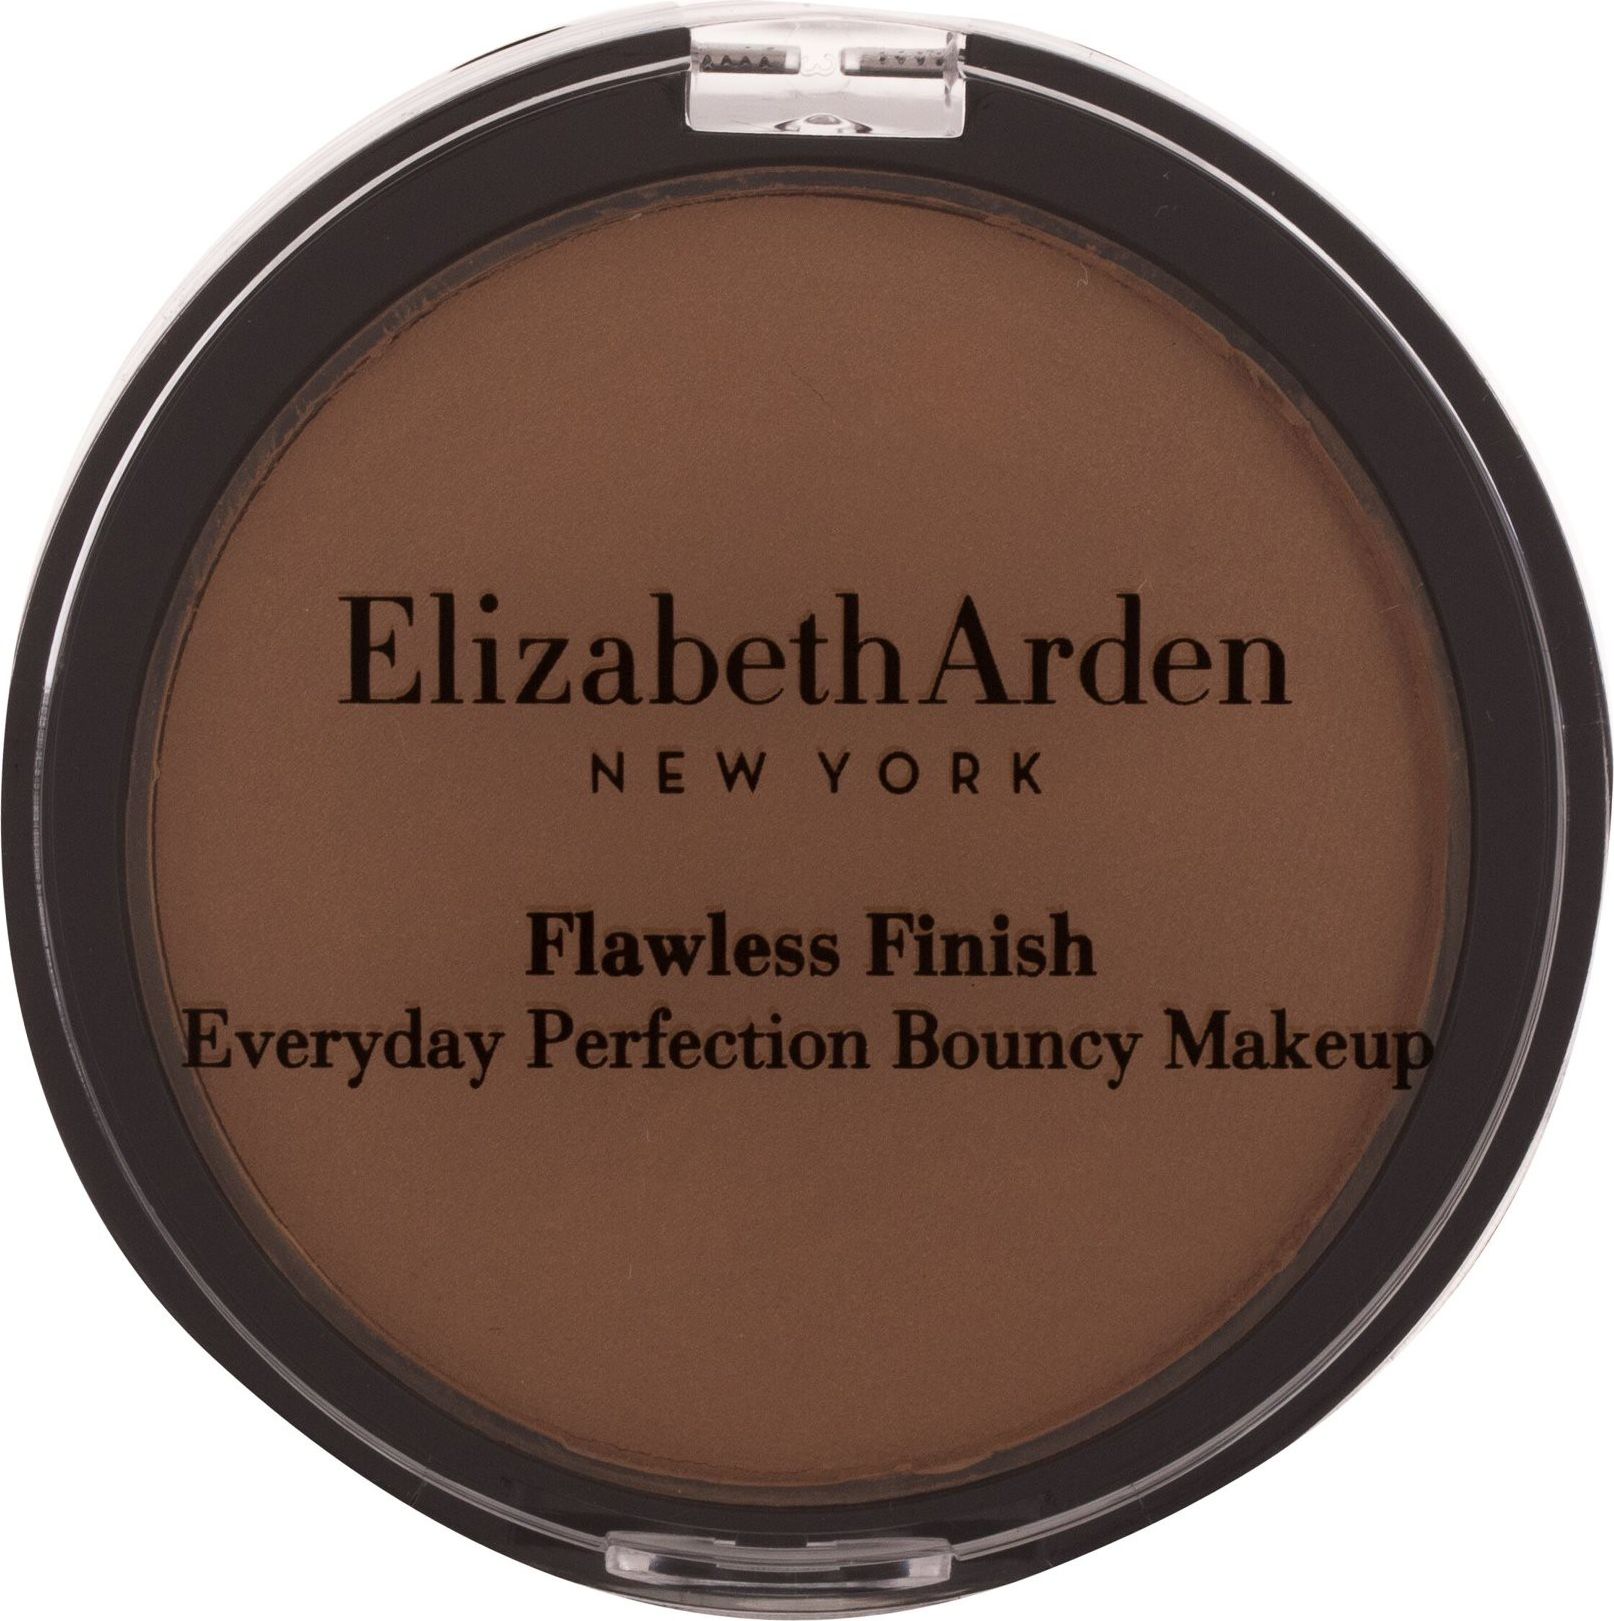 Elizabeth Arden Elizabeth Arden Flawless Finish Everyday Perfection Podklad 9g 12 Warm Pecan tester 120134 (085805562434) tonālais krēms